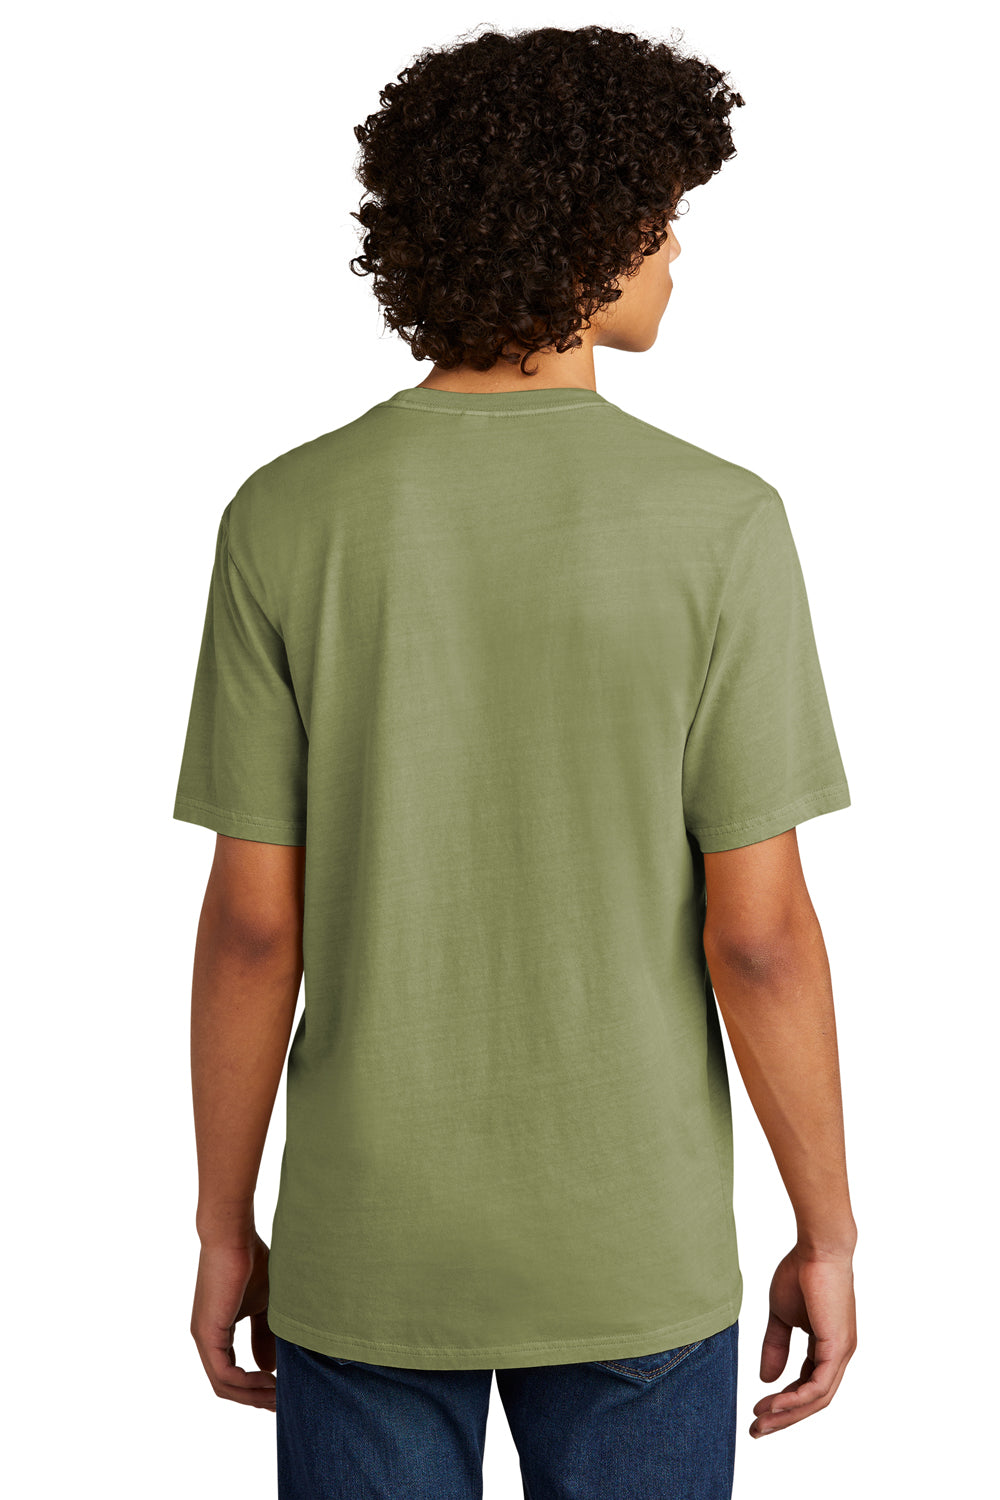 Allmade AL2400 Mens Mineral Dye Short Sleeve Crewneck T-Shirt Lichen Green Model Back